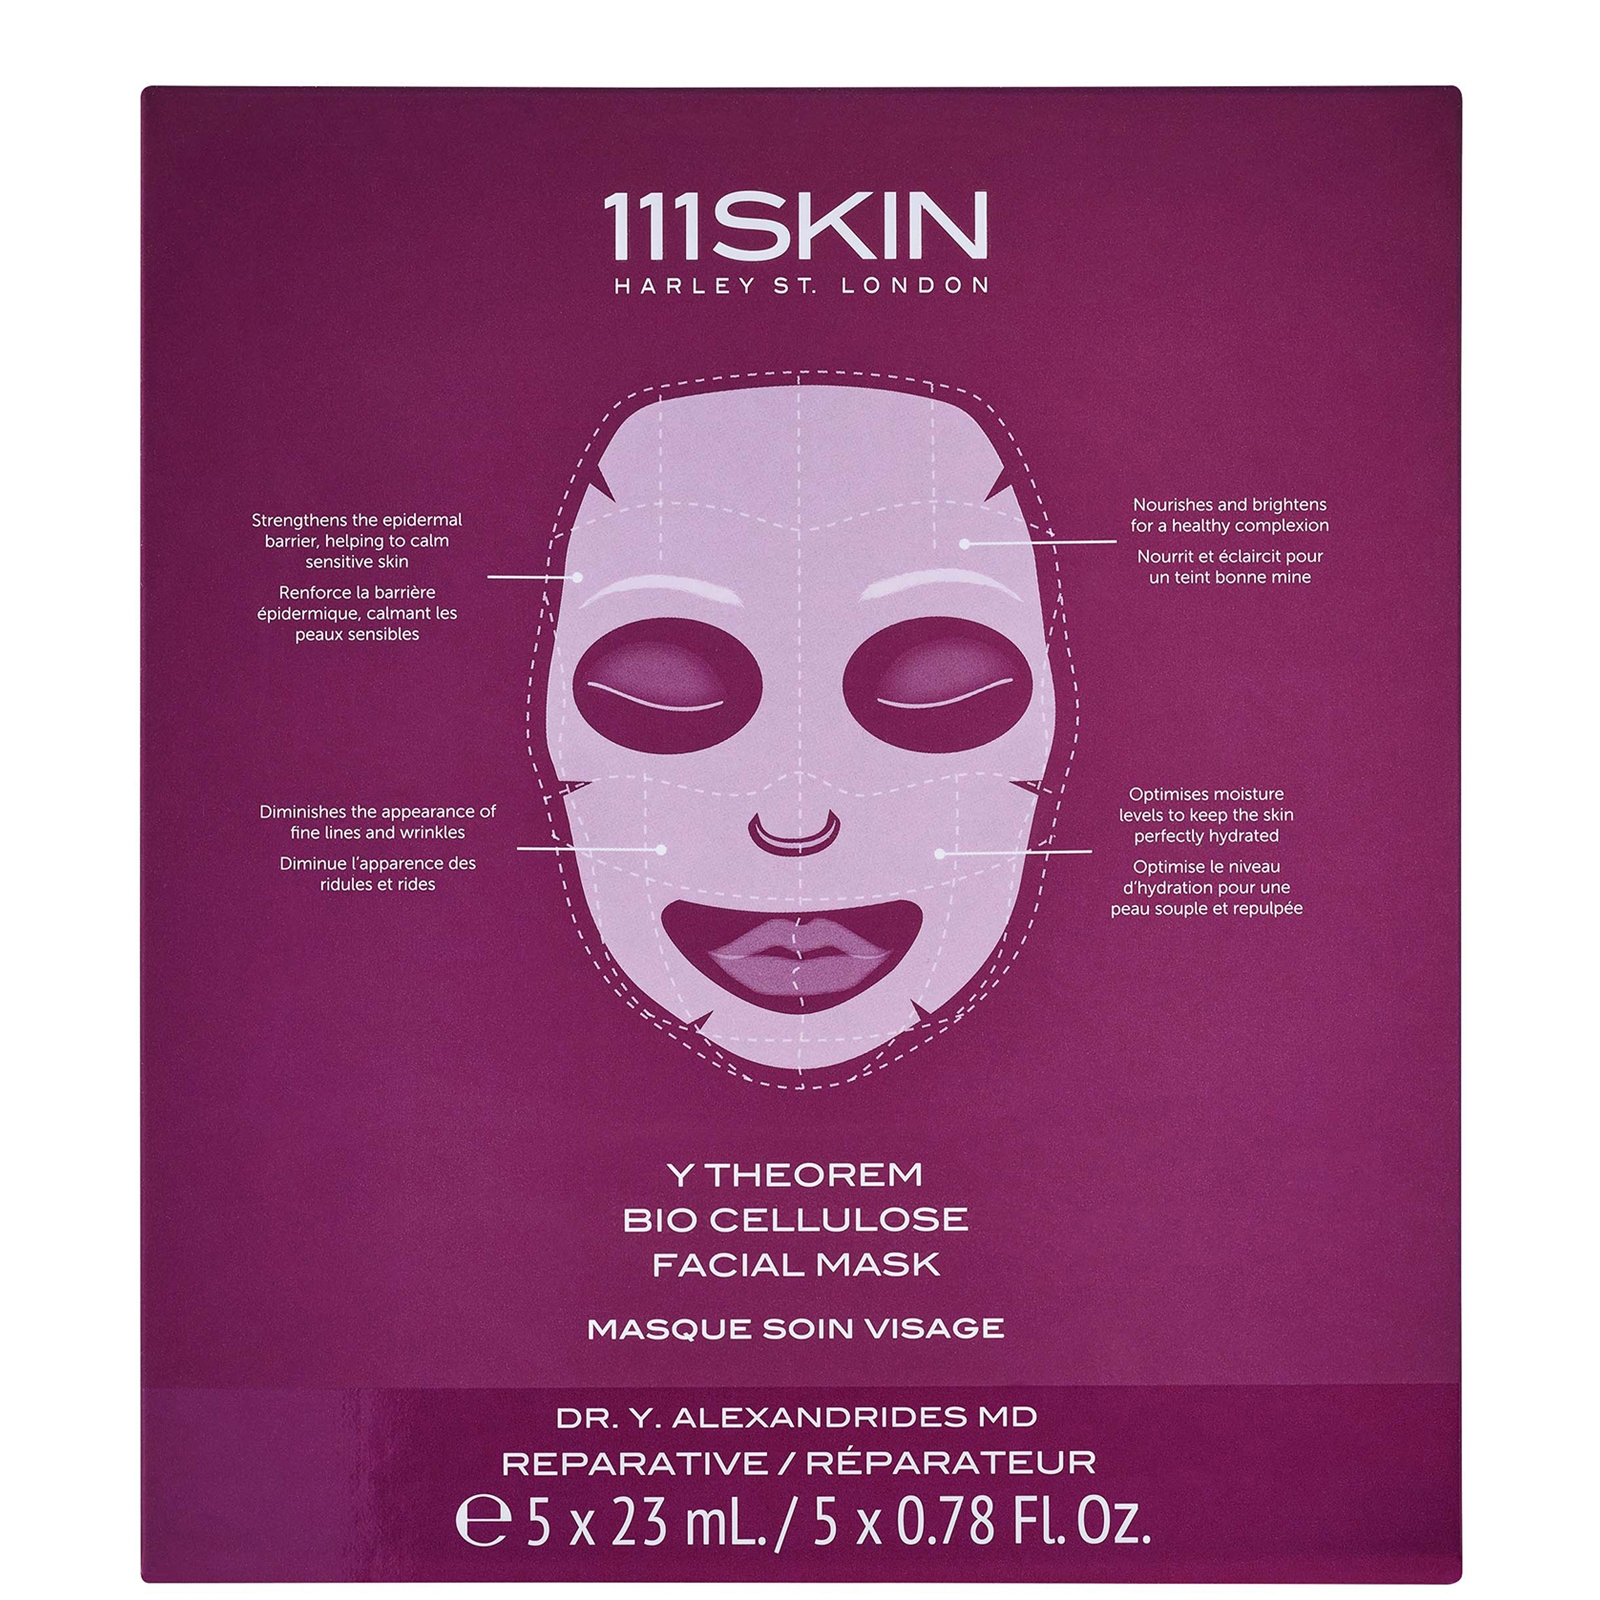 Image of 111SKIN Y Theorem Bio Cellulose Facial Mask Box